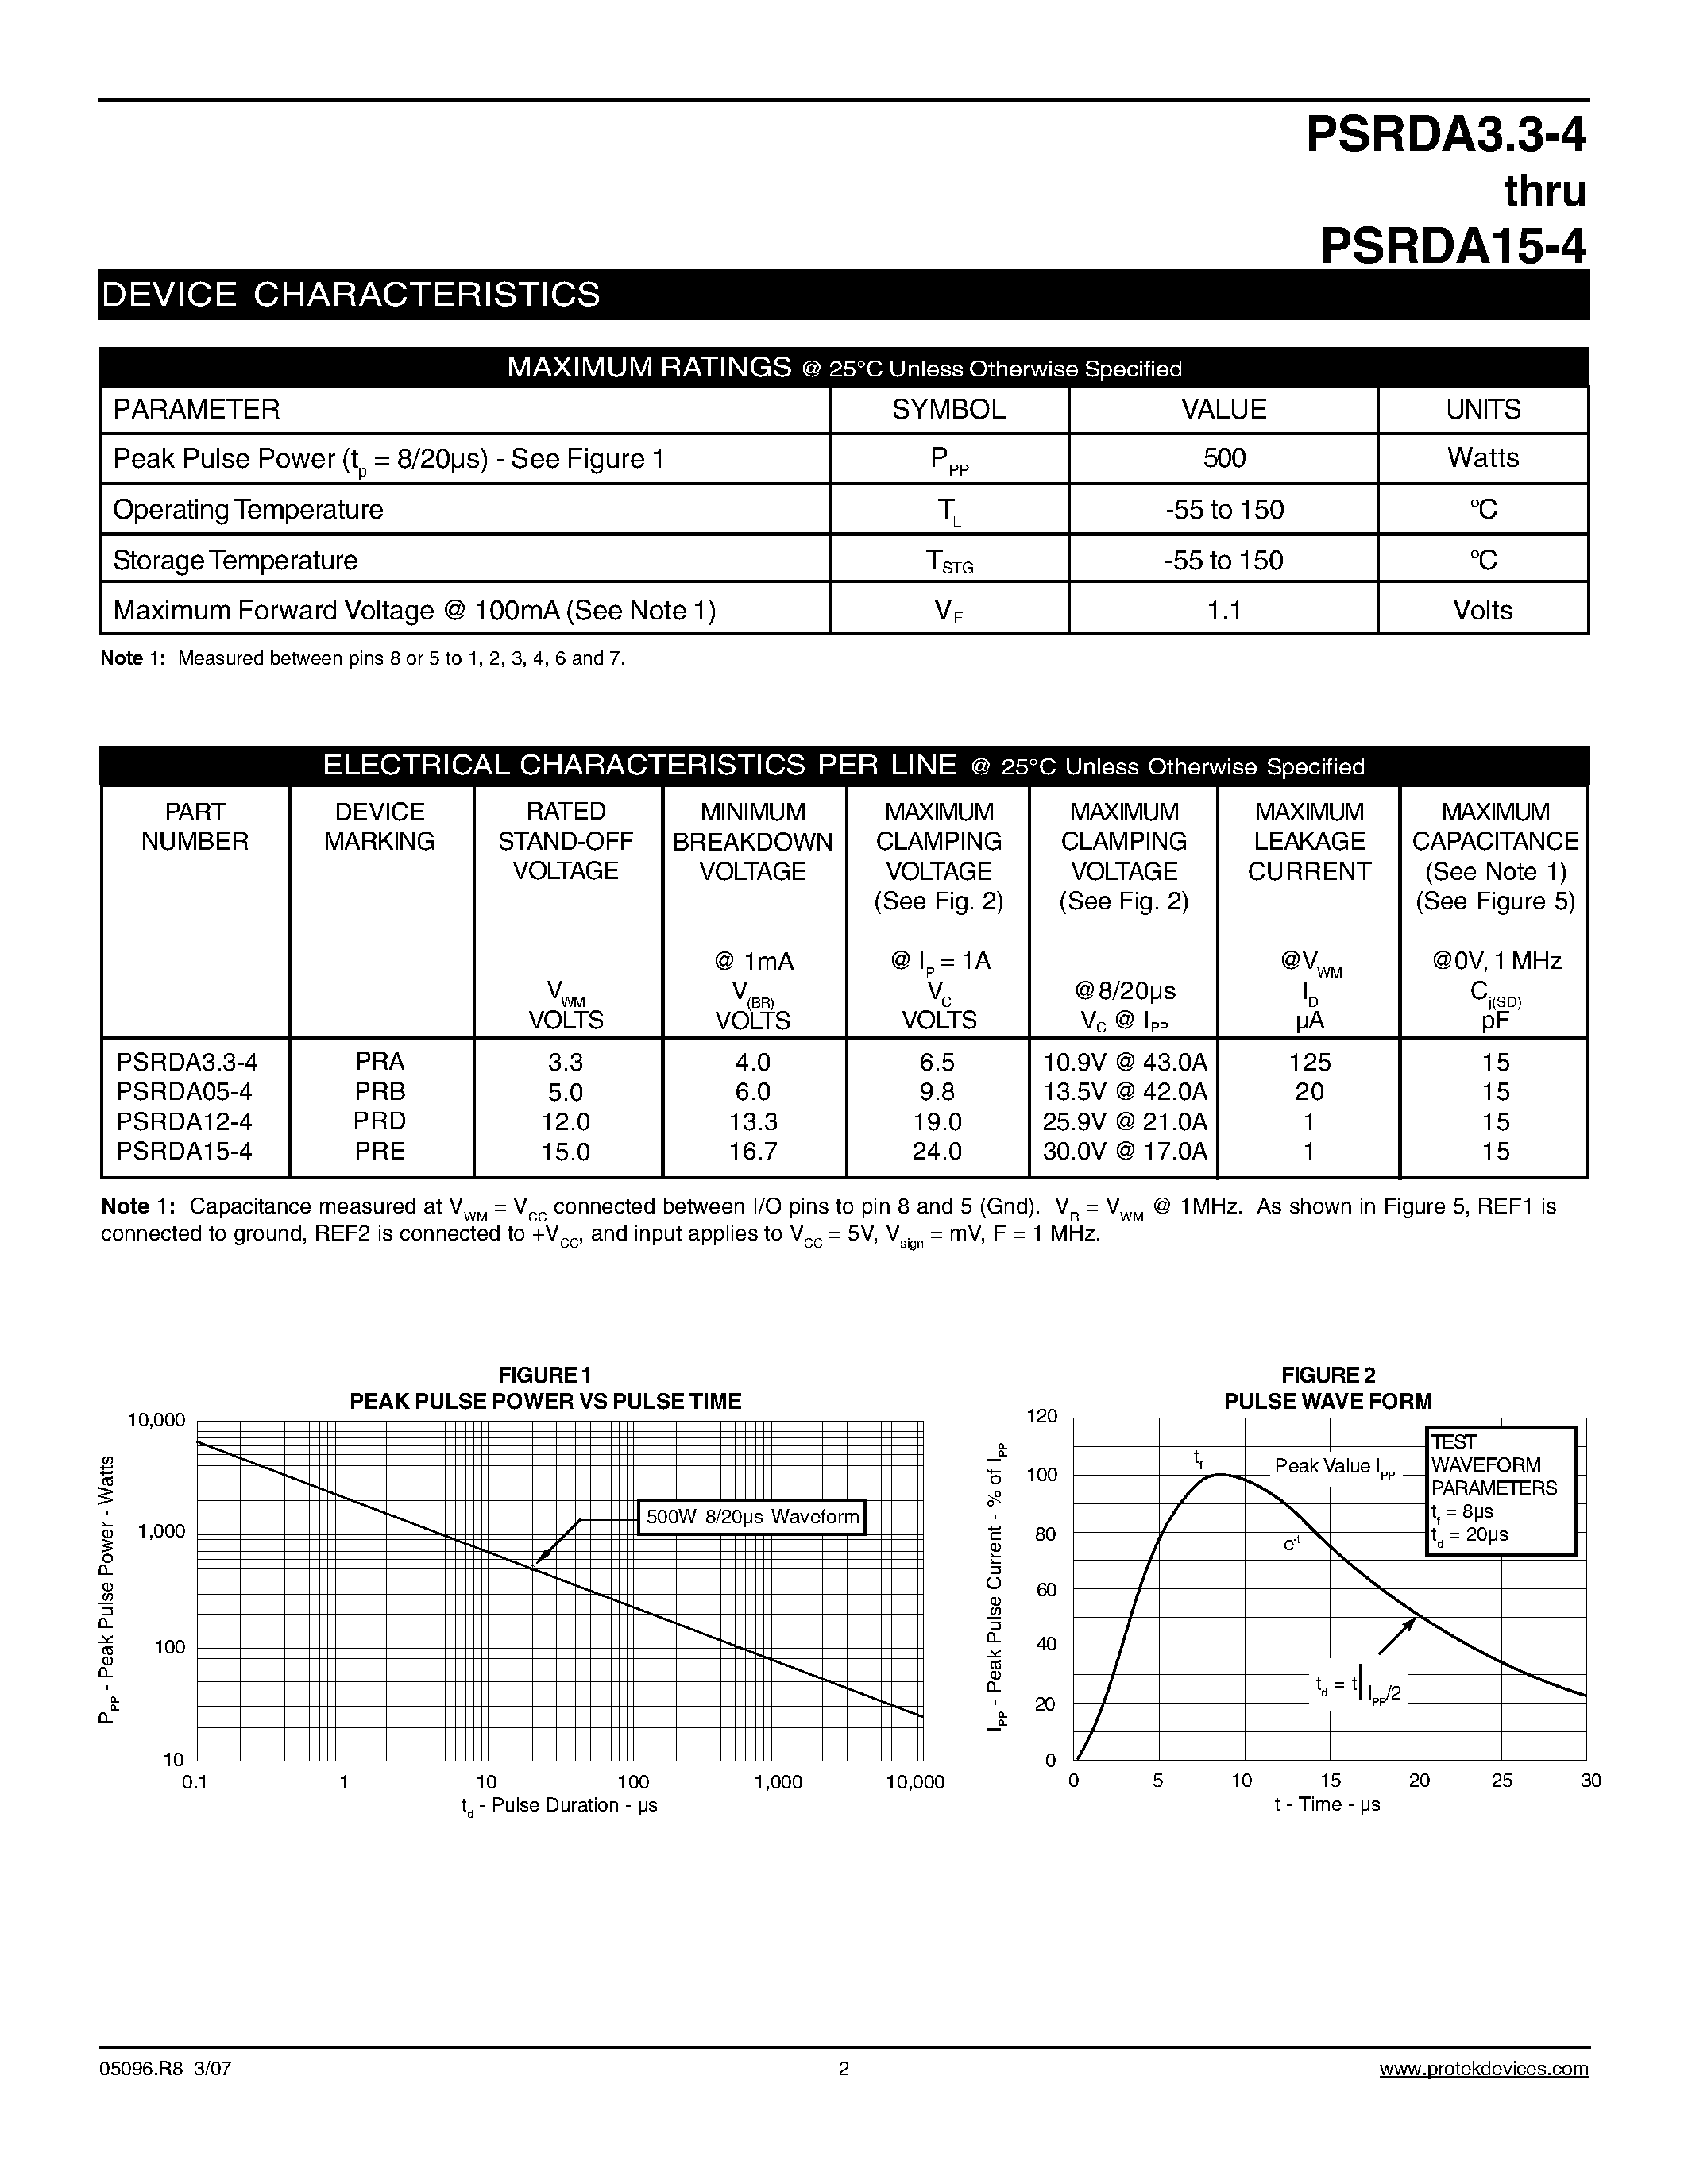 Datasheet PSRDA12-4 - (PSRDA3.3-4 - PSRDA15-4) STEERING DIODE/ TVS ARRAY COMBO page 2